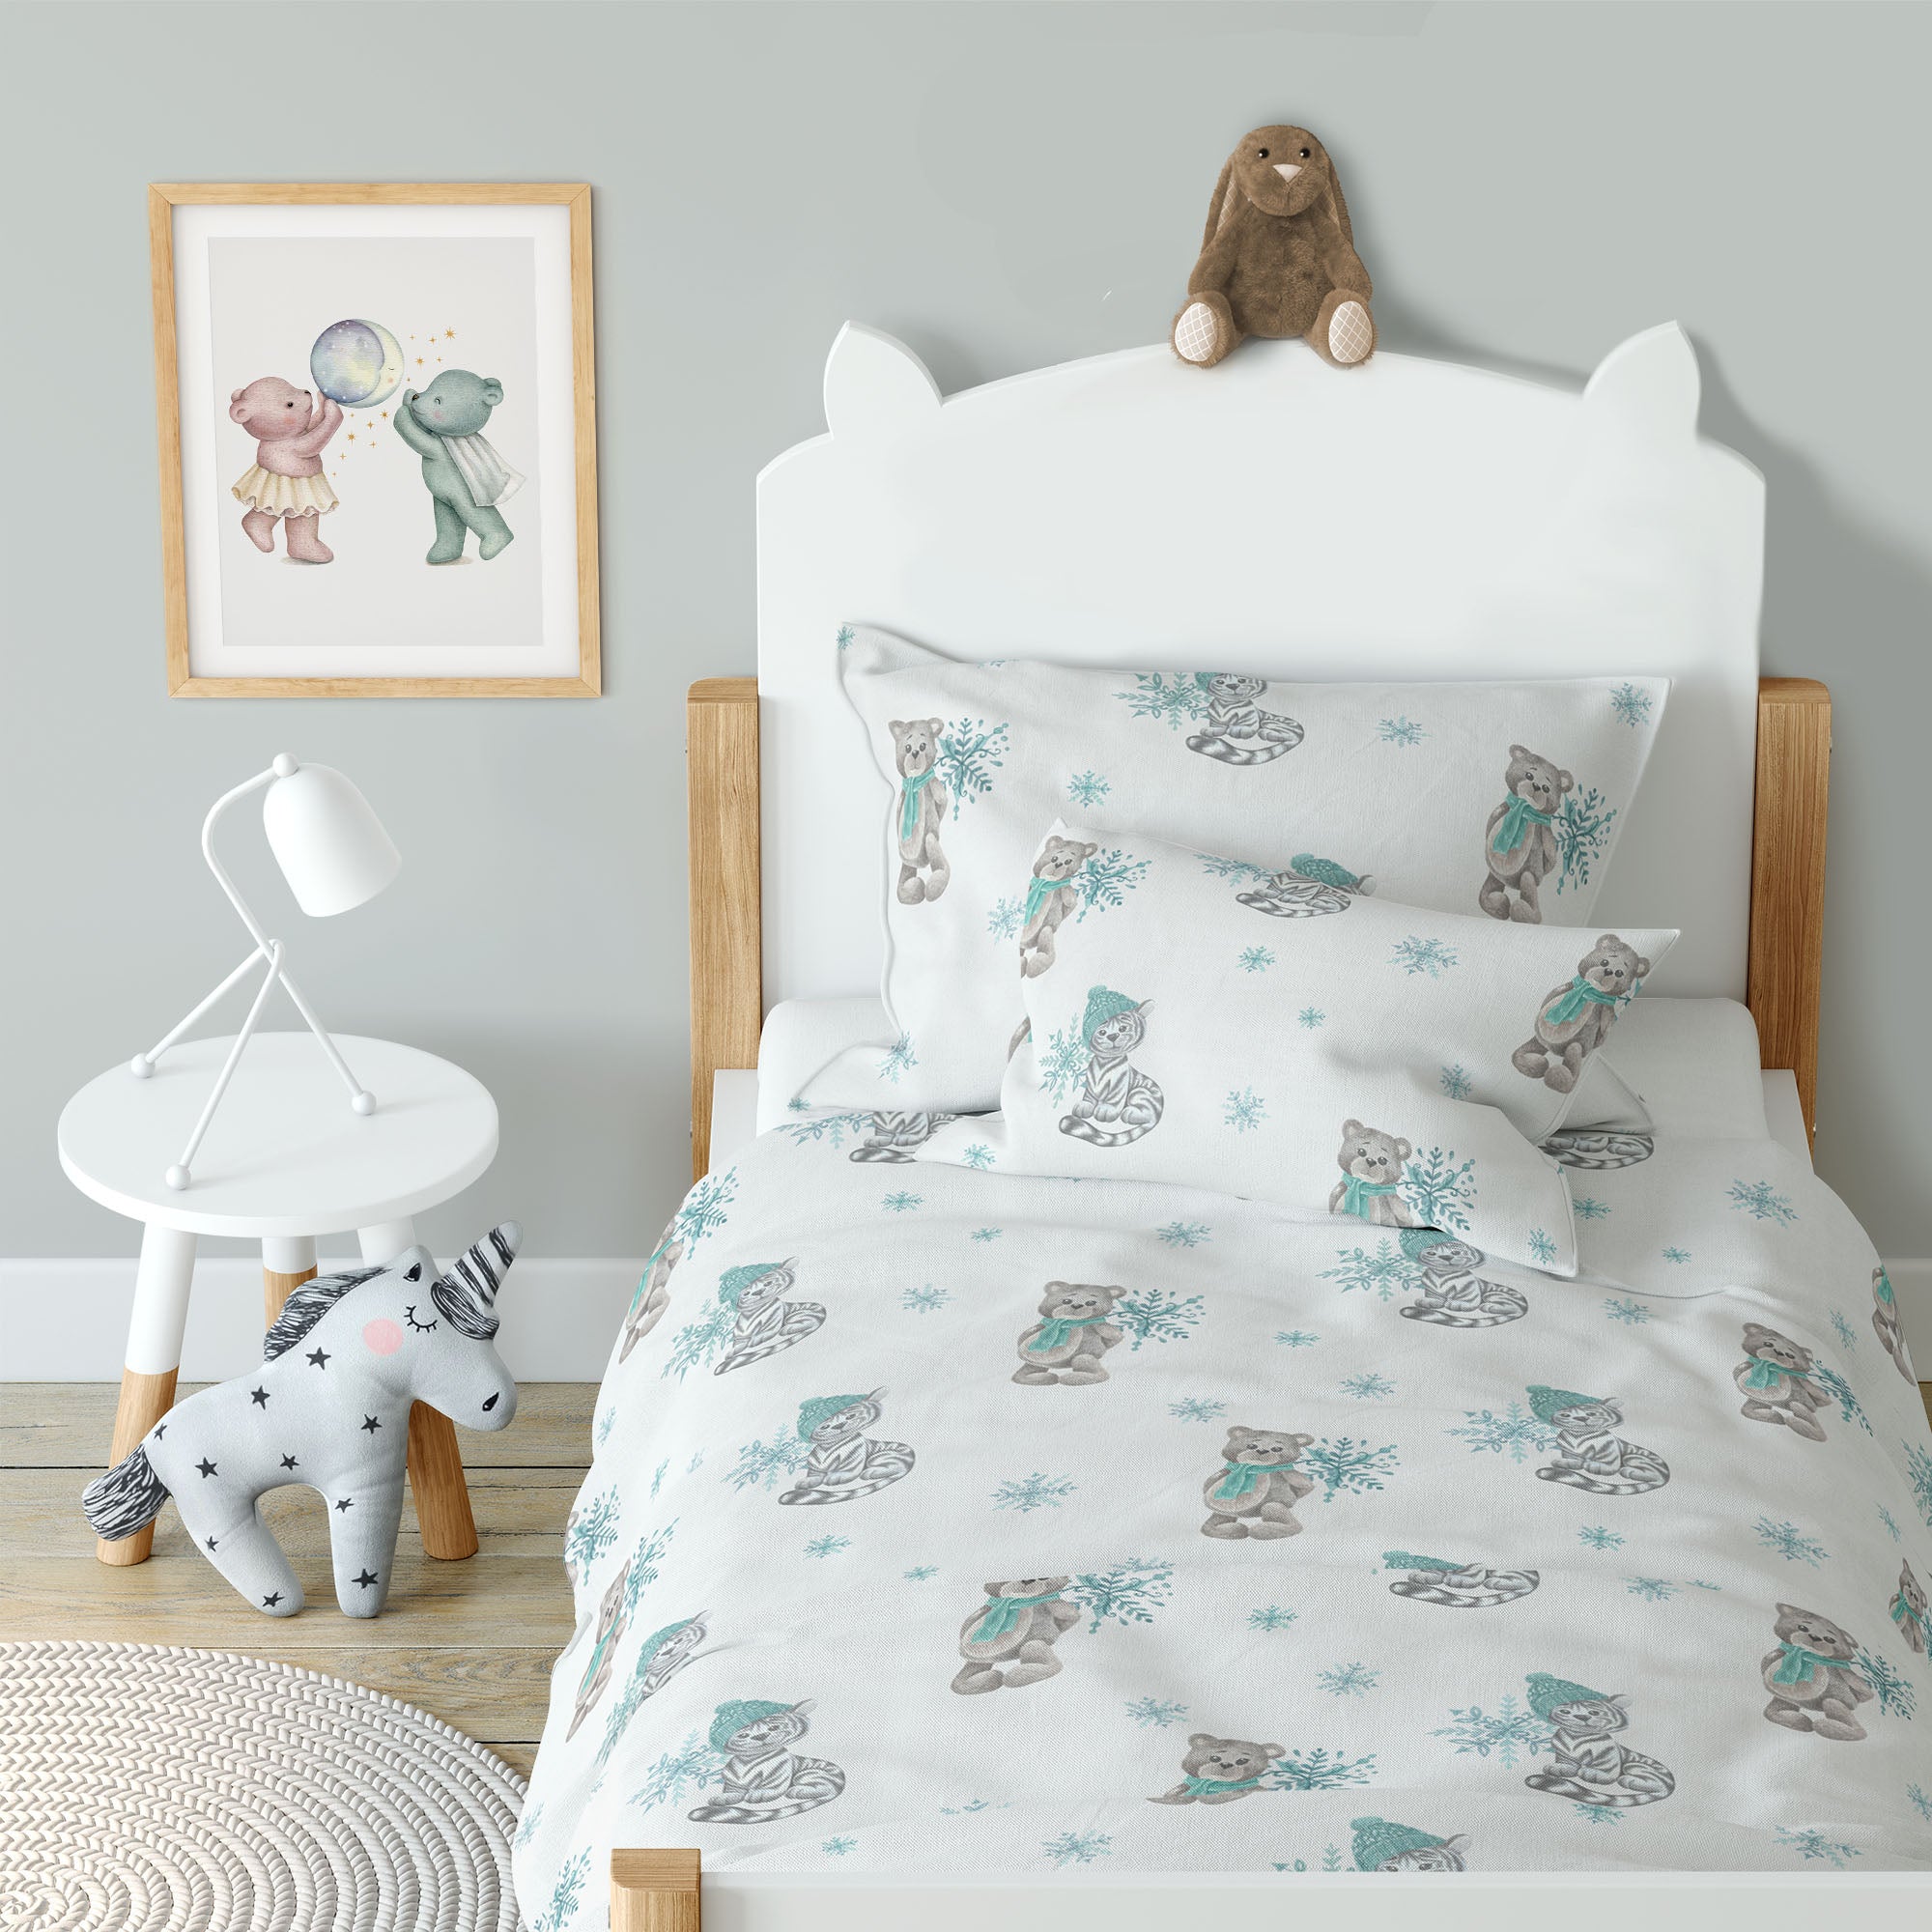 "Tiger and bear" premium children's bed linen